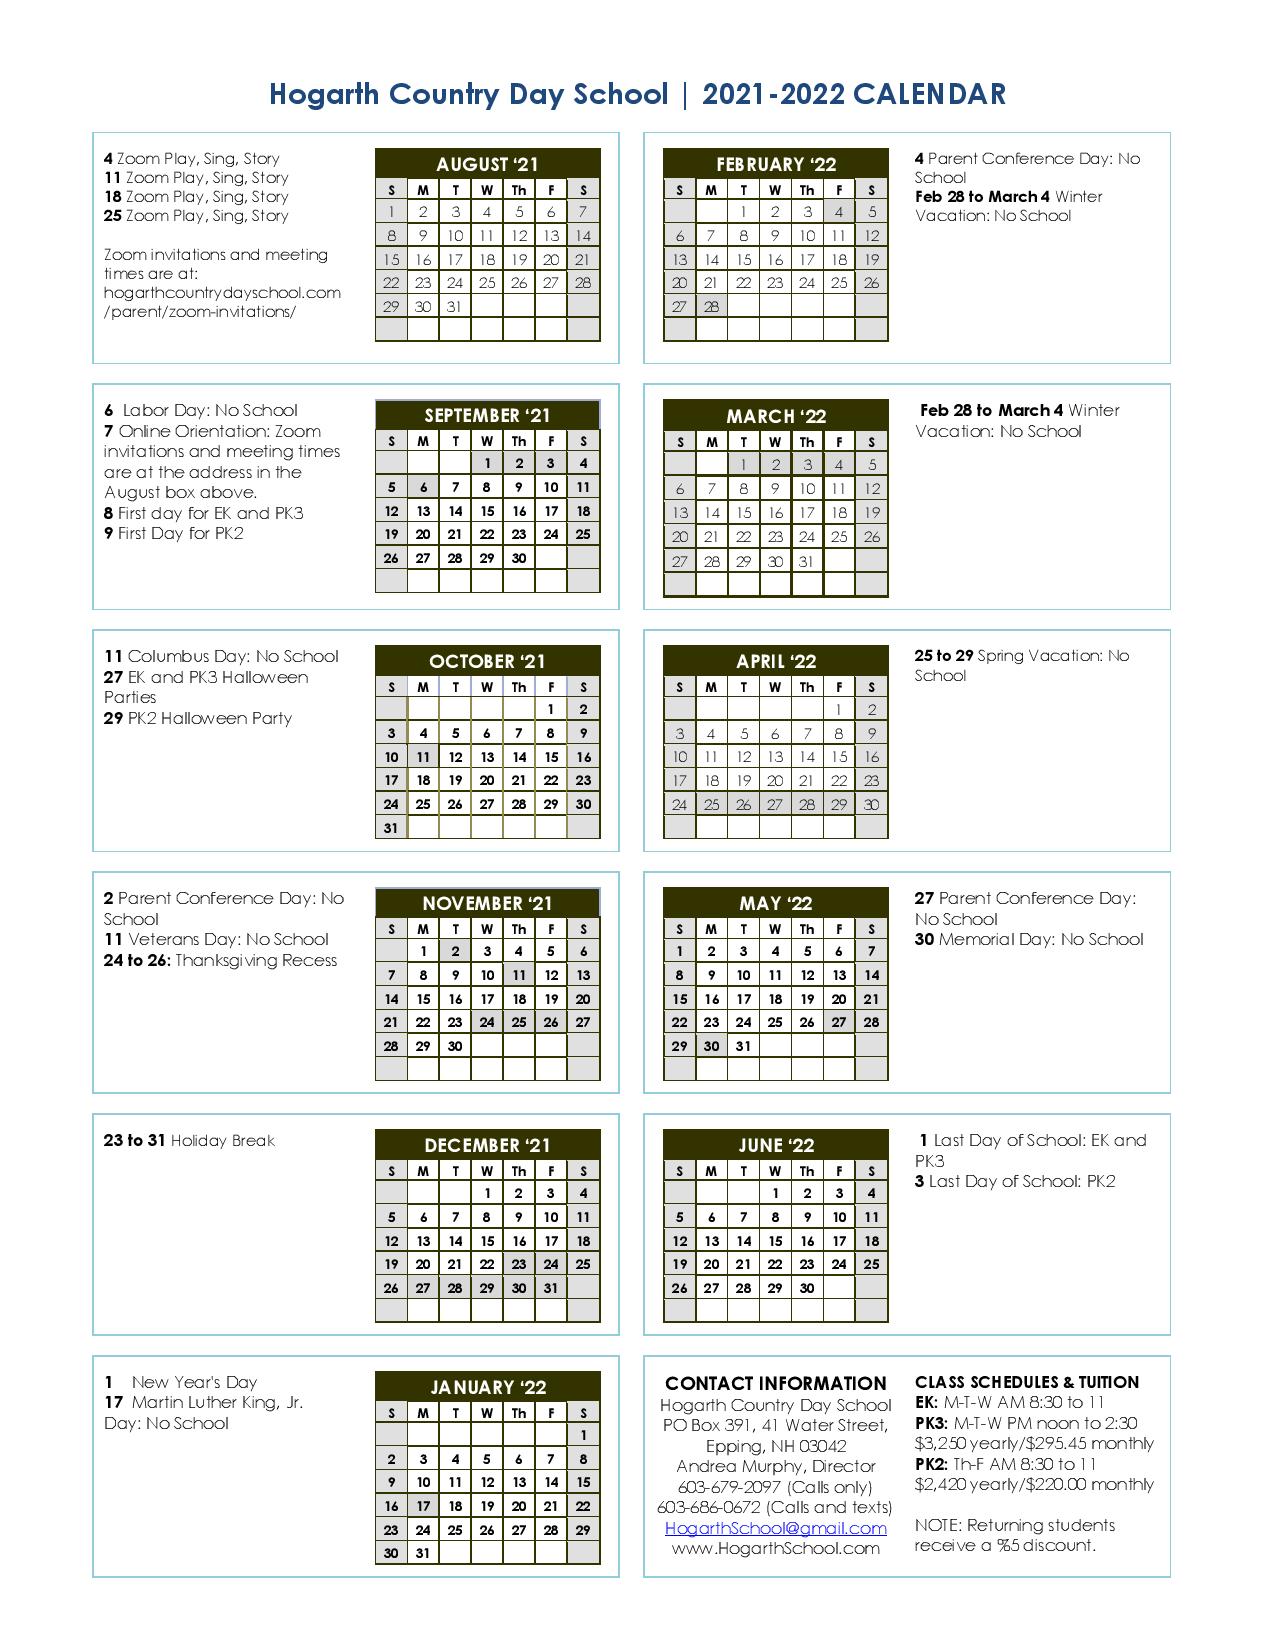 Emerson College Academic Calendar 2022 Current Academic Calendar | Hogarth Country Day School